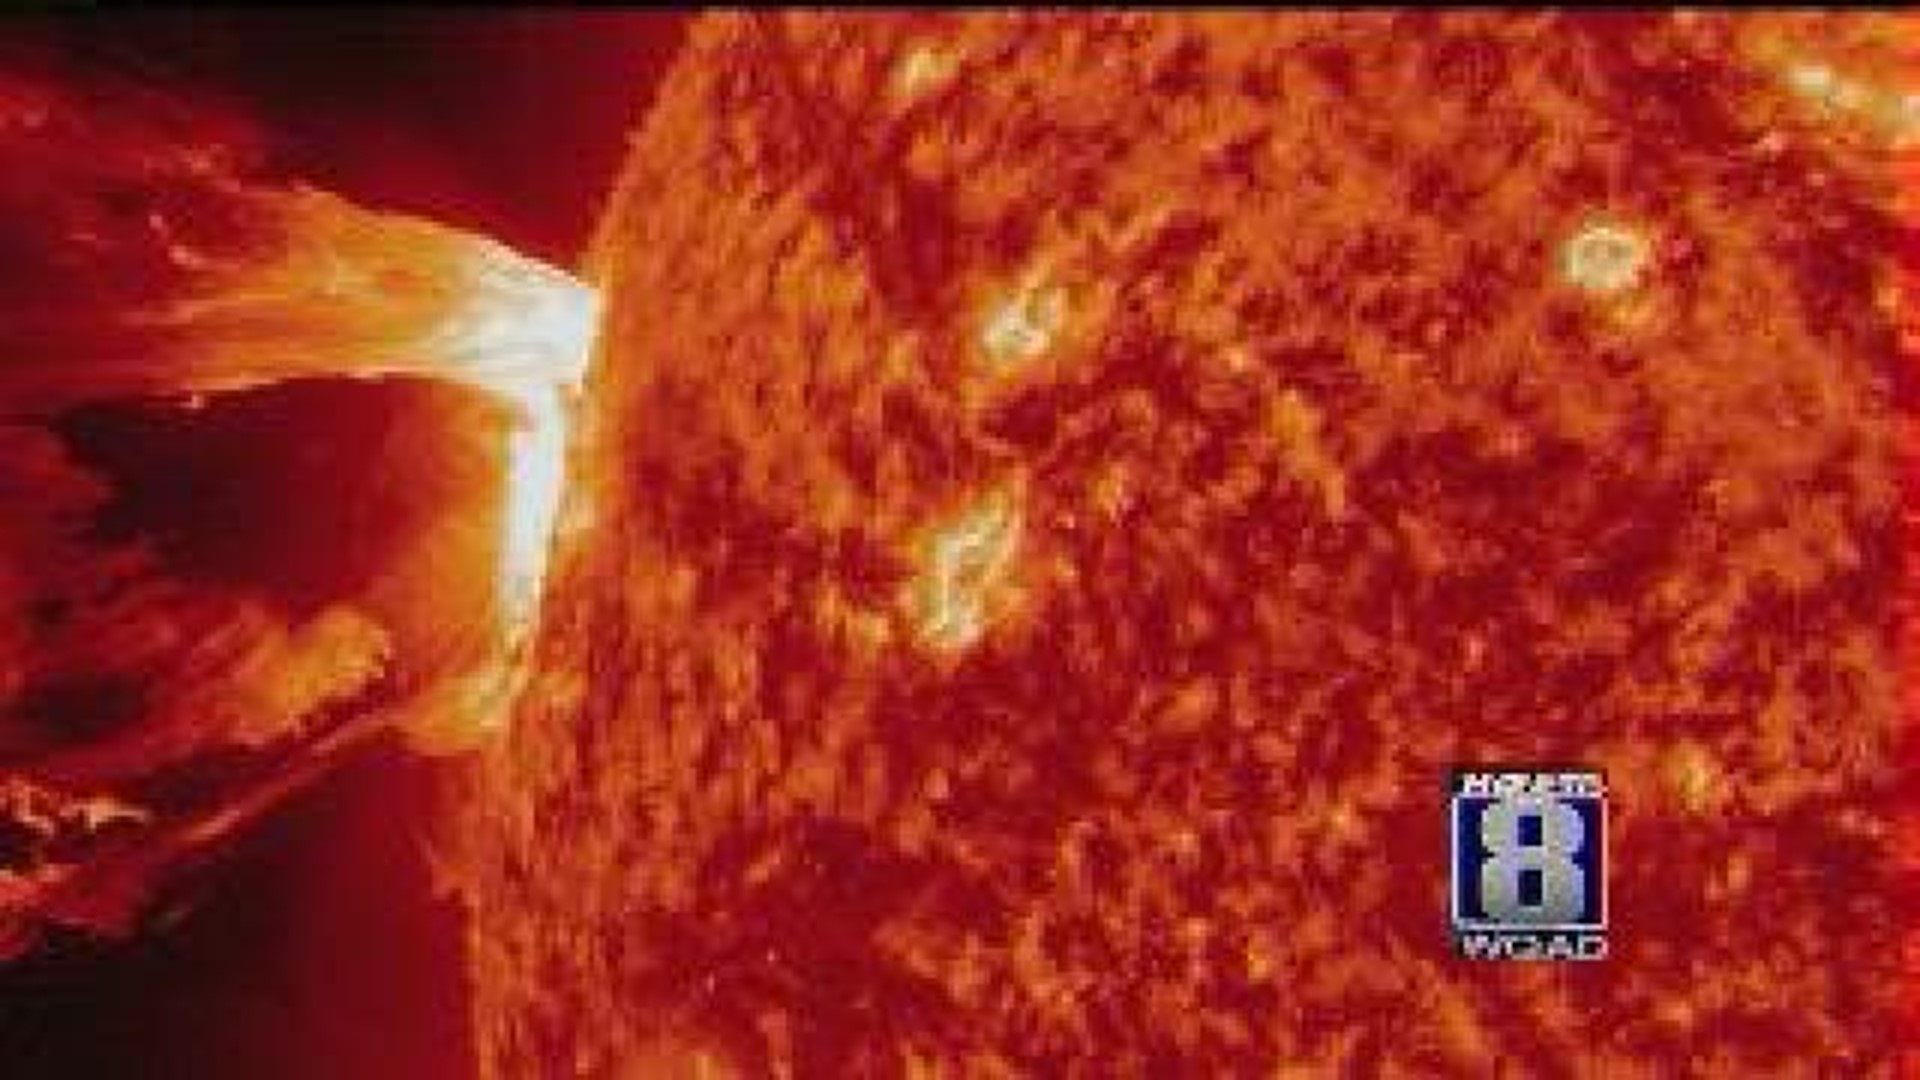 Solar prominence eruption